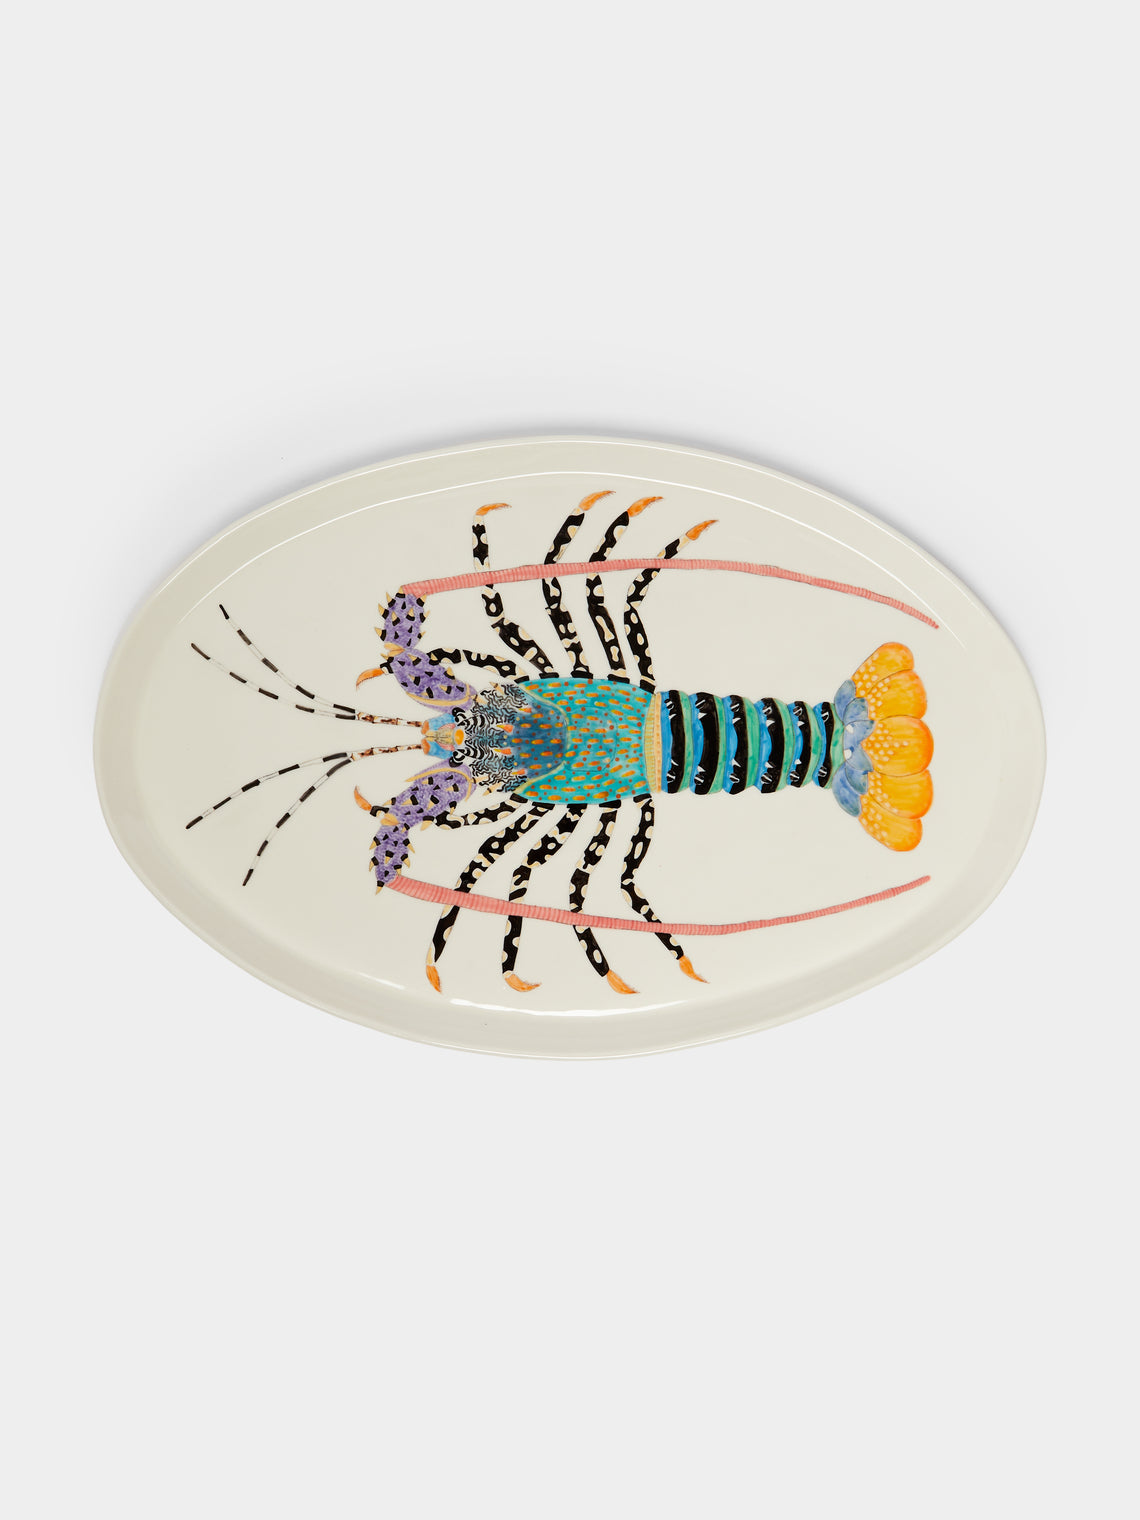 Casa Adams - Tropical Rock Lobster Hand-Painted Porcelain Large Serving Platter -  - ABASK - 